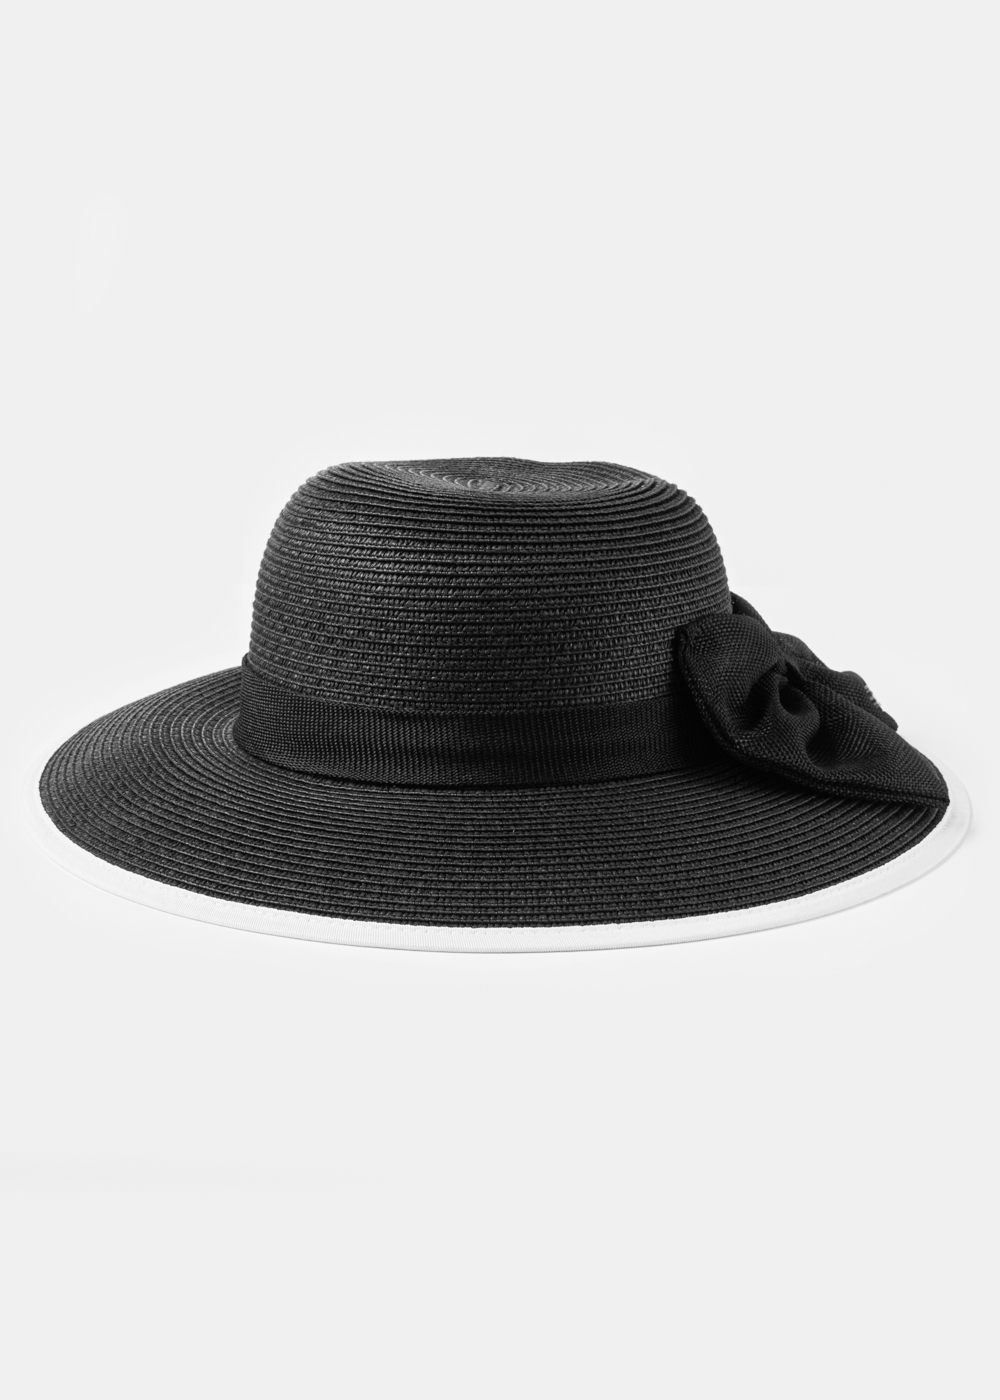 Black Hat w/ Black Bow